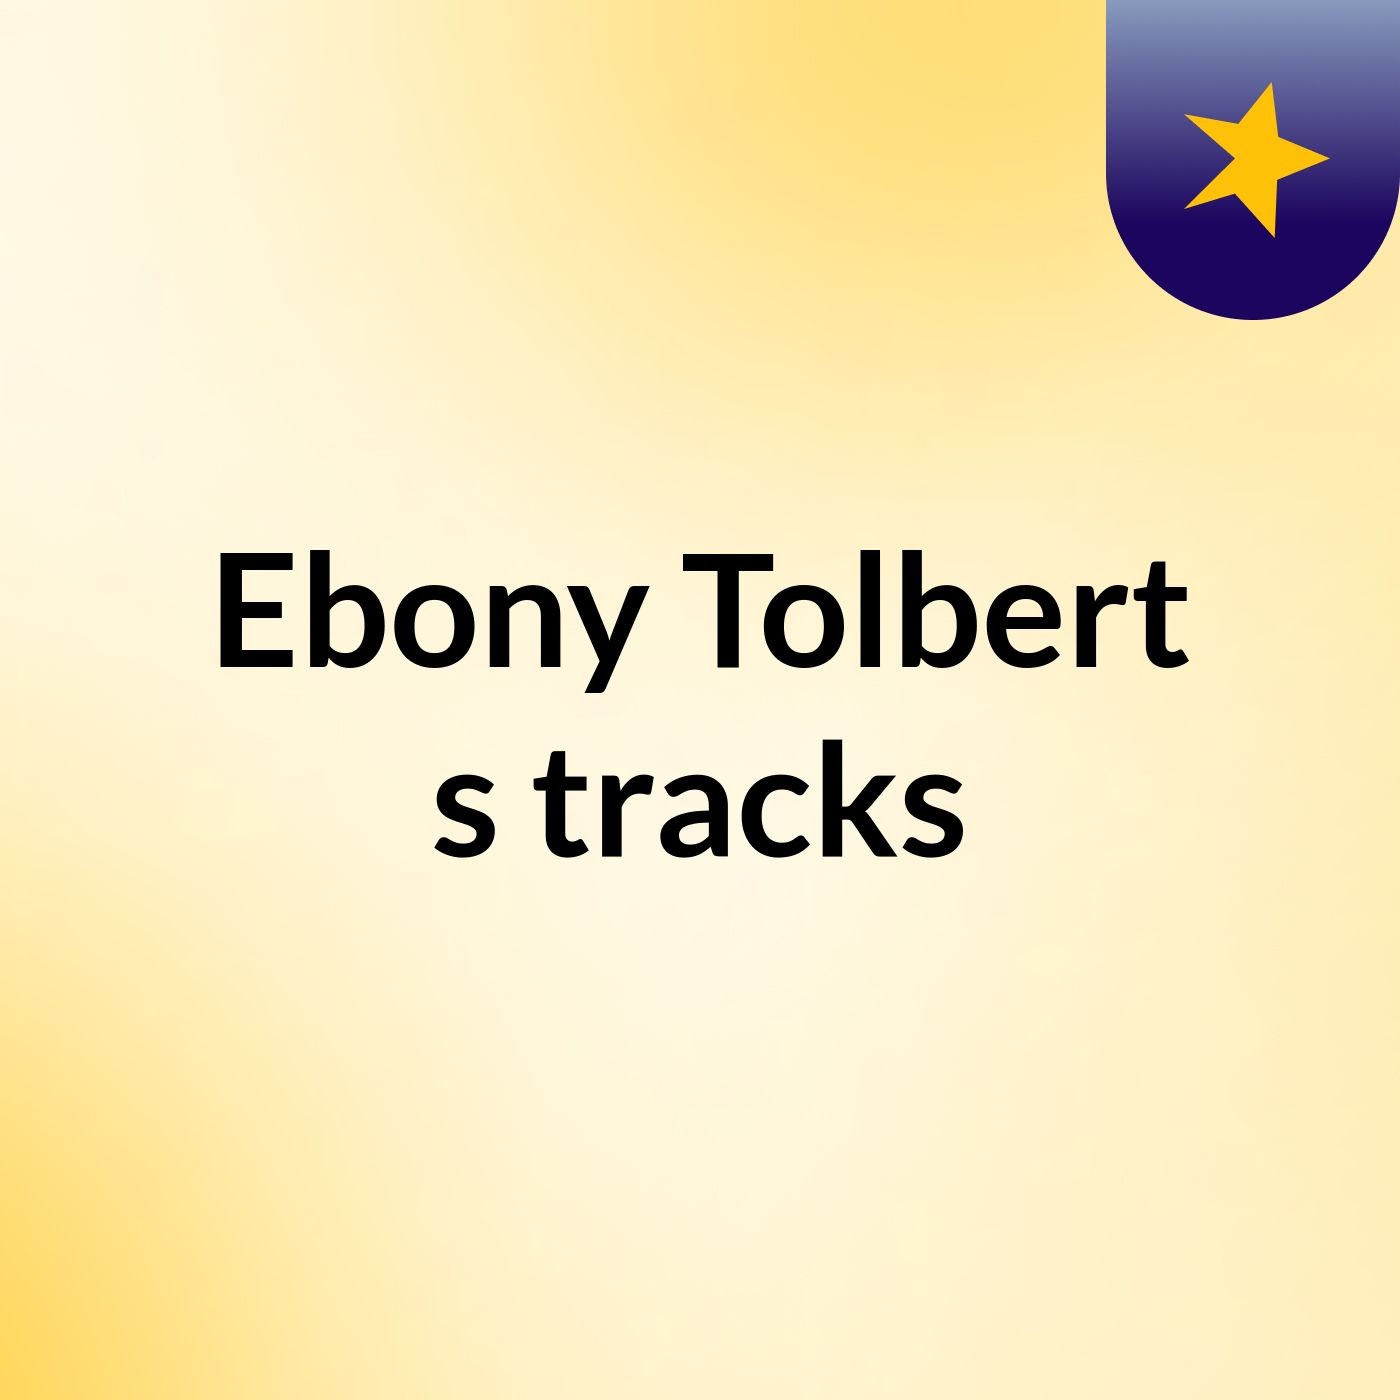 Ebony Tolbert's tracks